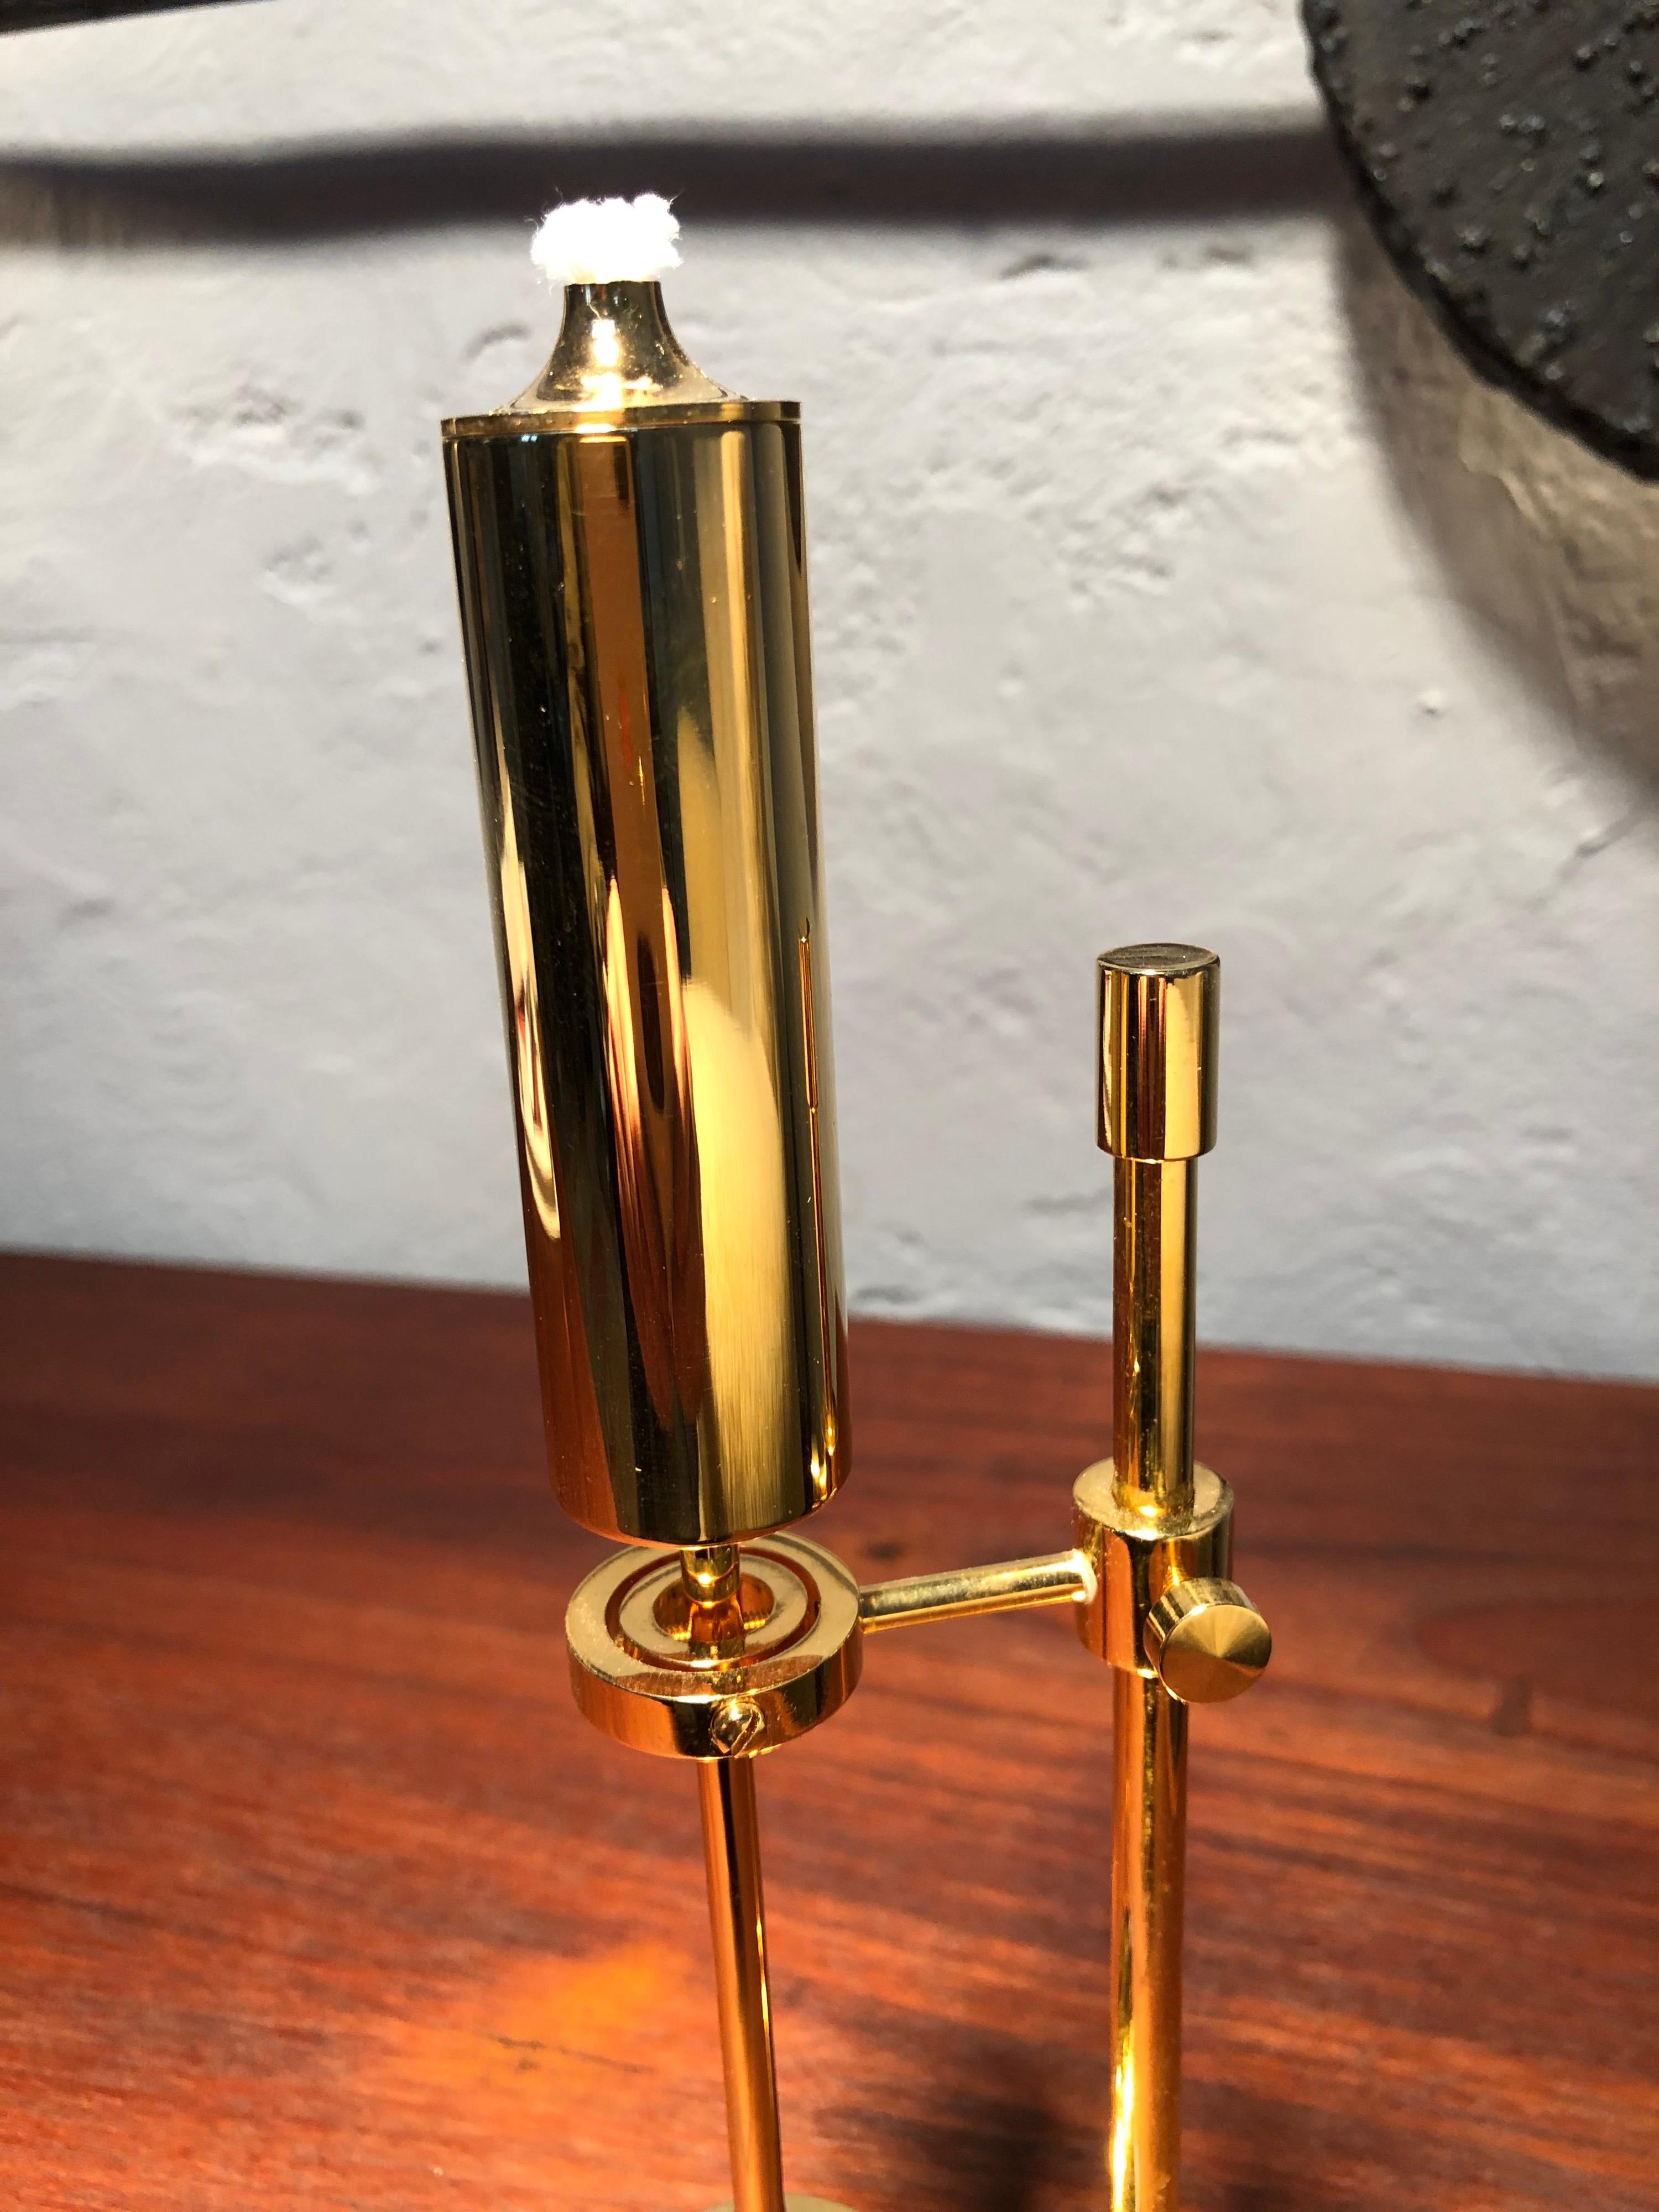 Danish Vintage Unused Oil Lamp by Ilse Ammonsen in 24-Carat Gold Plate